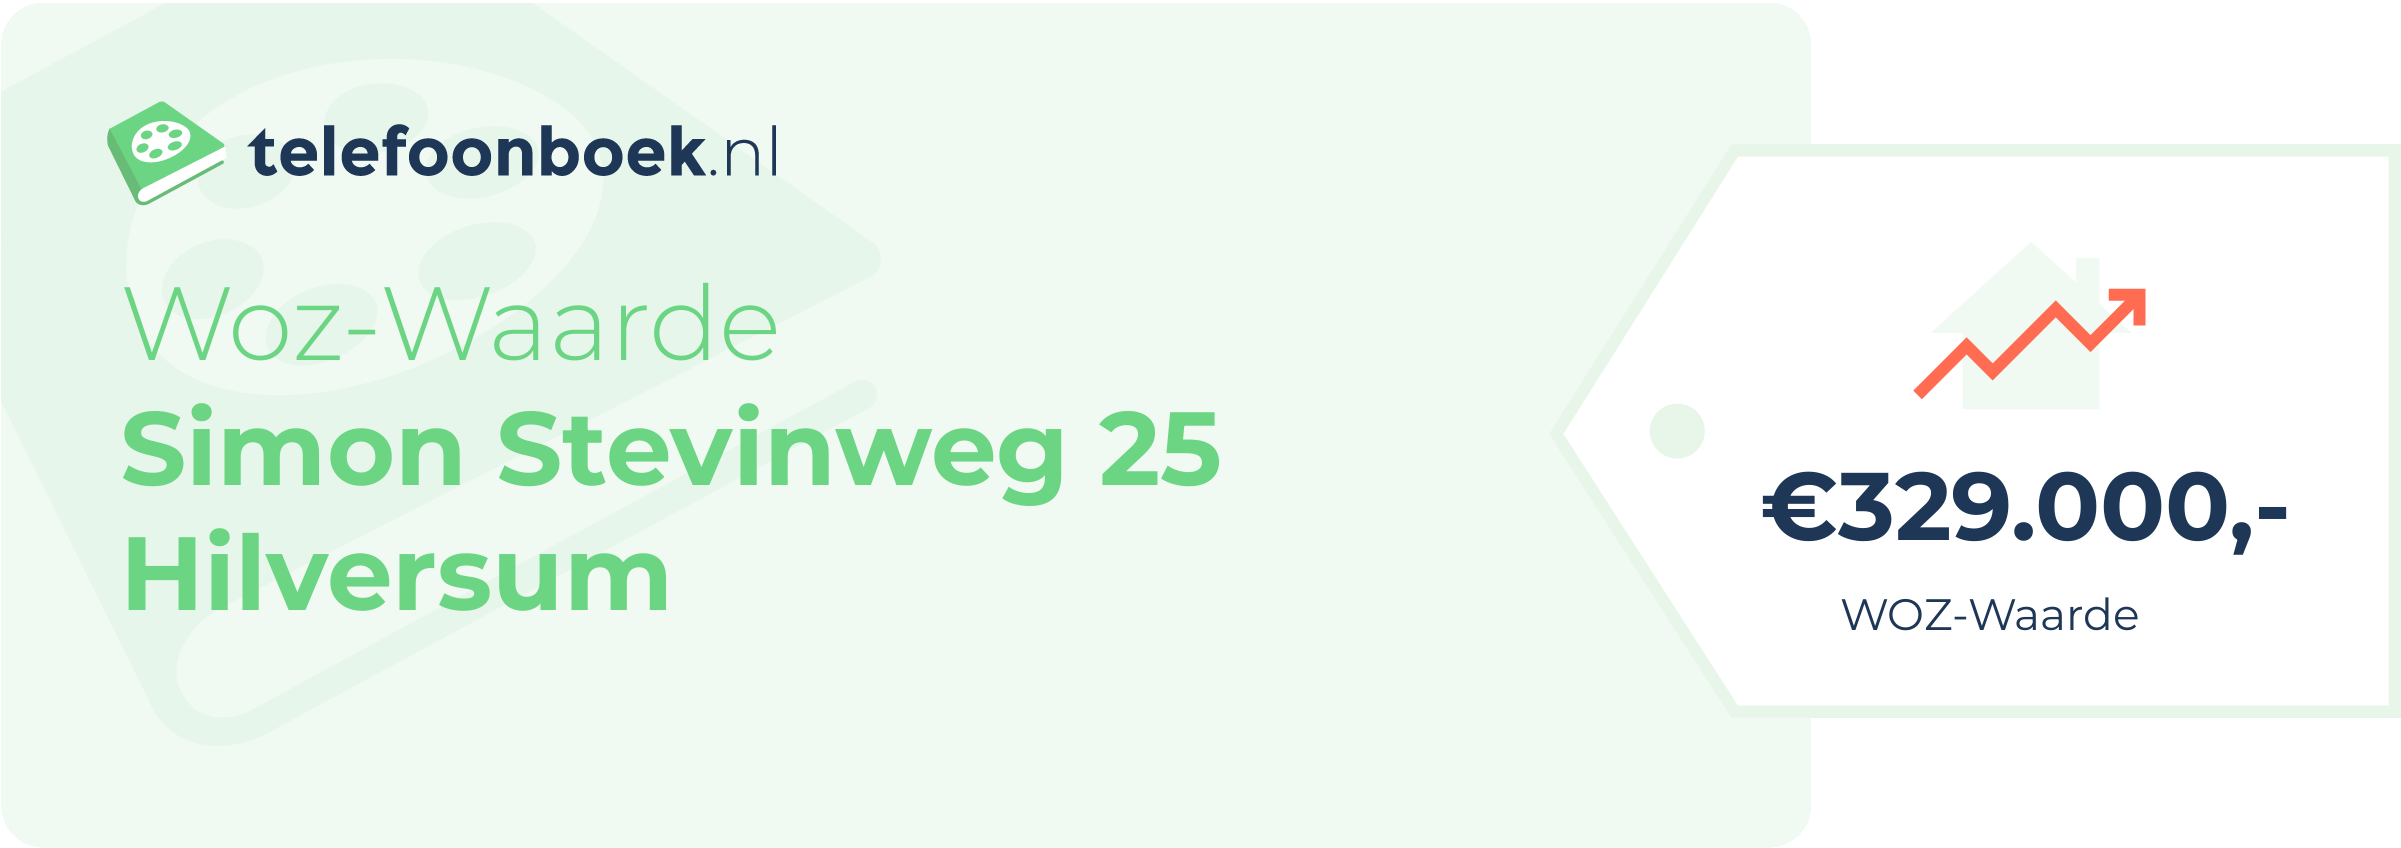 WOZ-waarde Simon Stevinweg 25 Hilversum